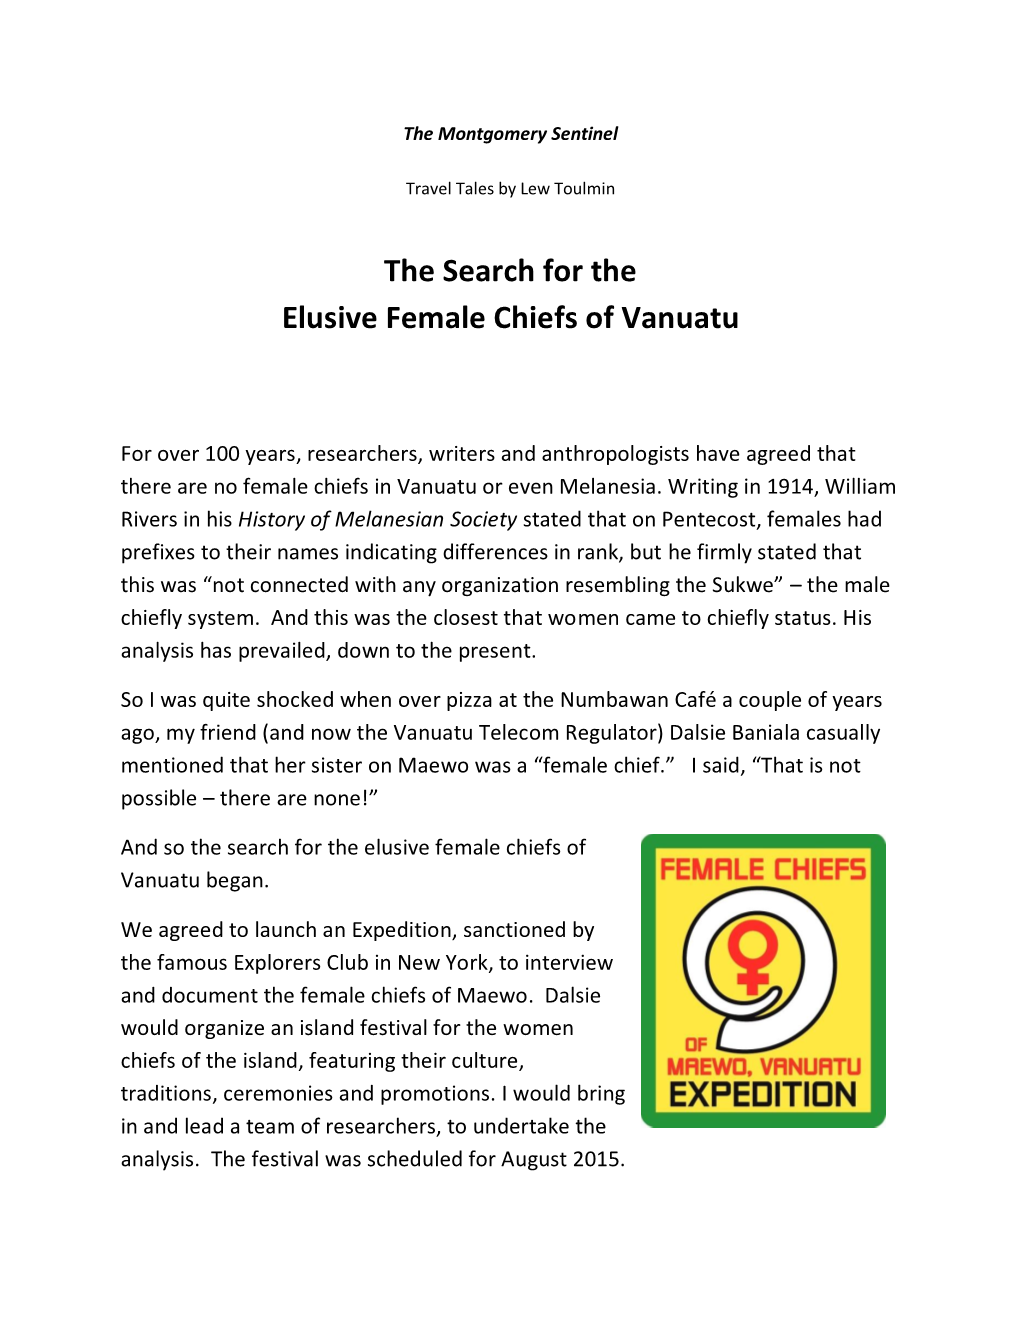 The Search for the Elusive Female Chiefs of Vanuatu